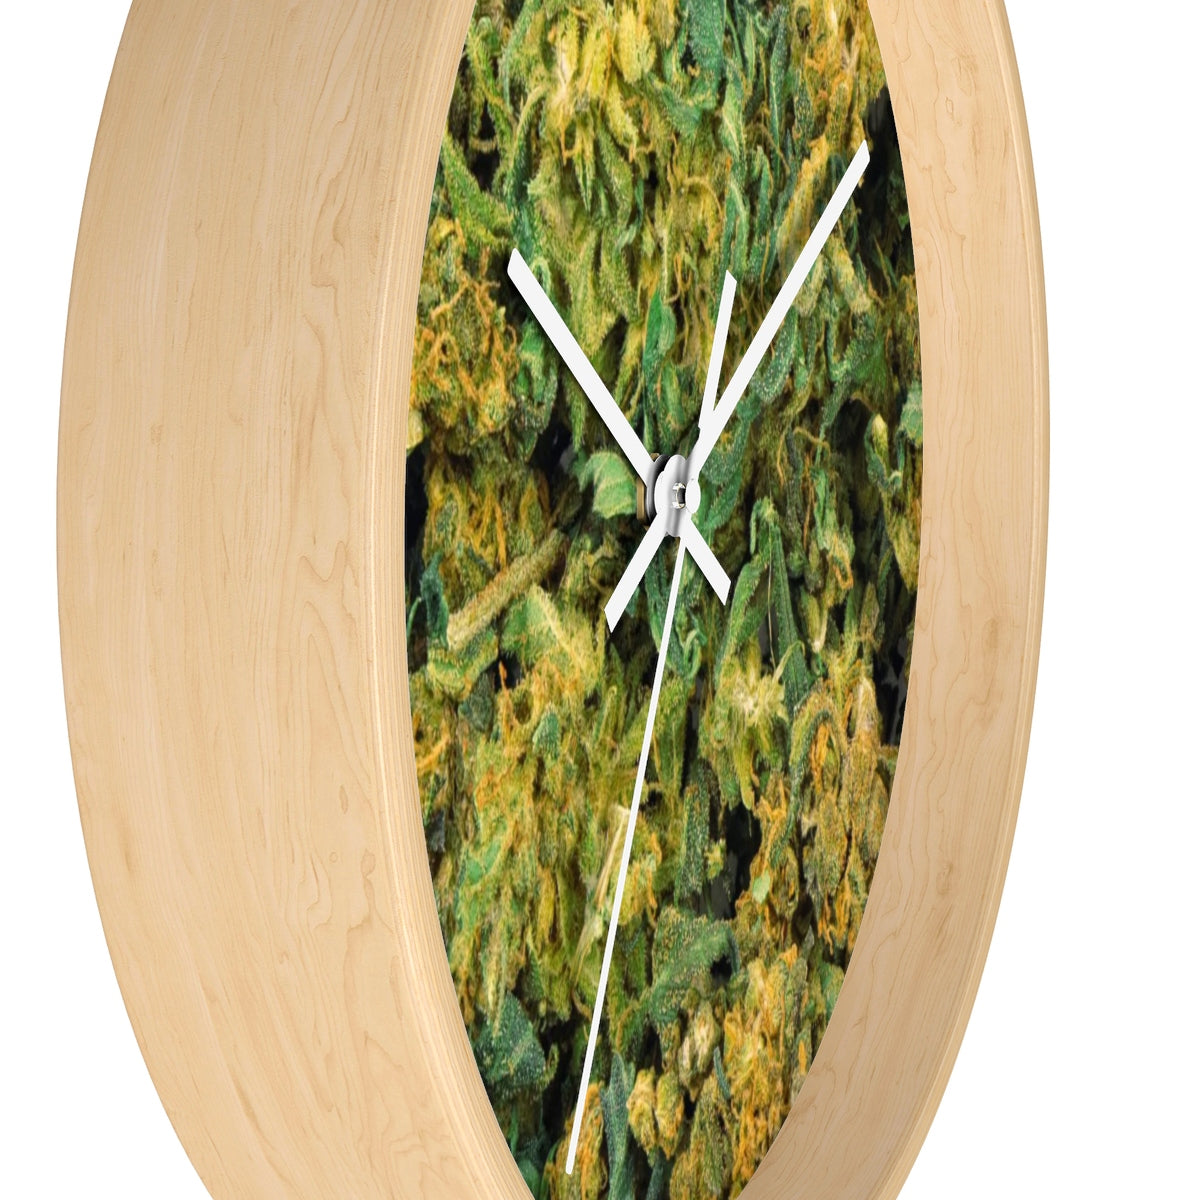 CannaNug Cannabis Wall clock